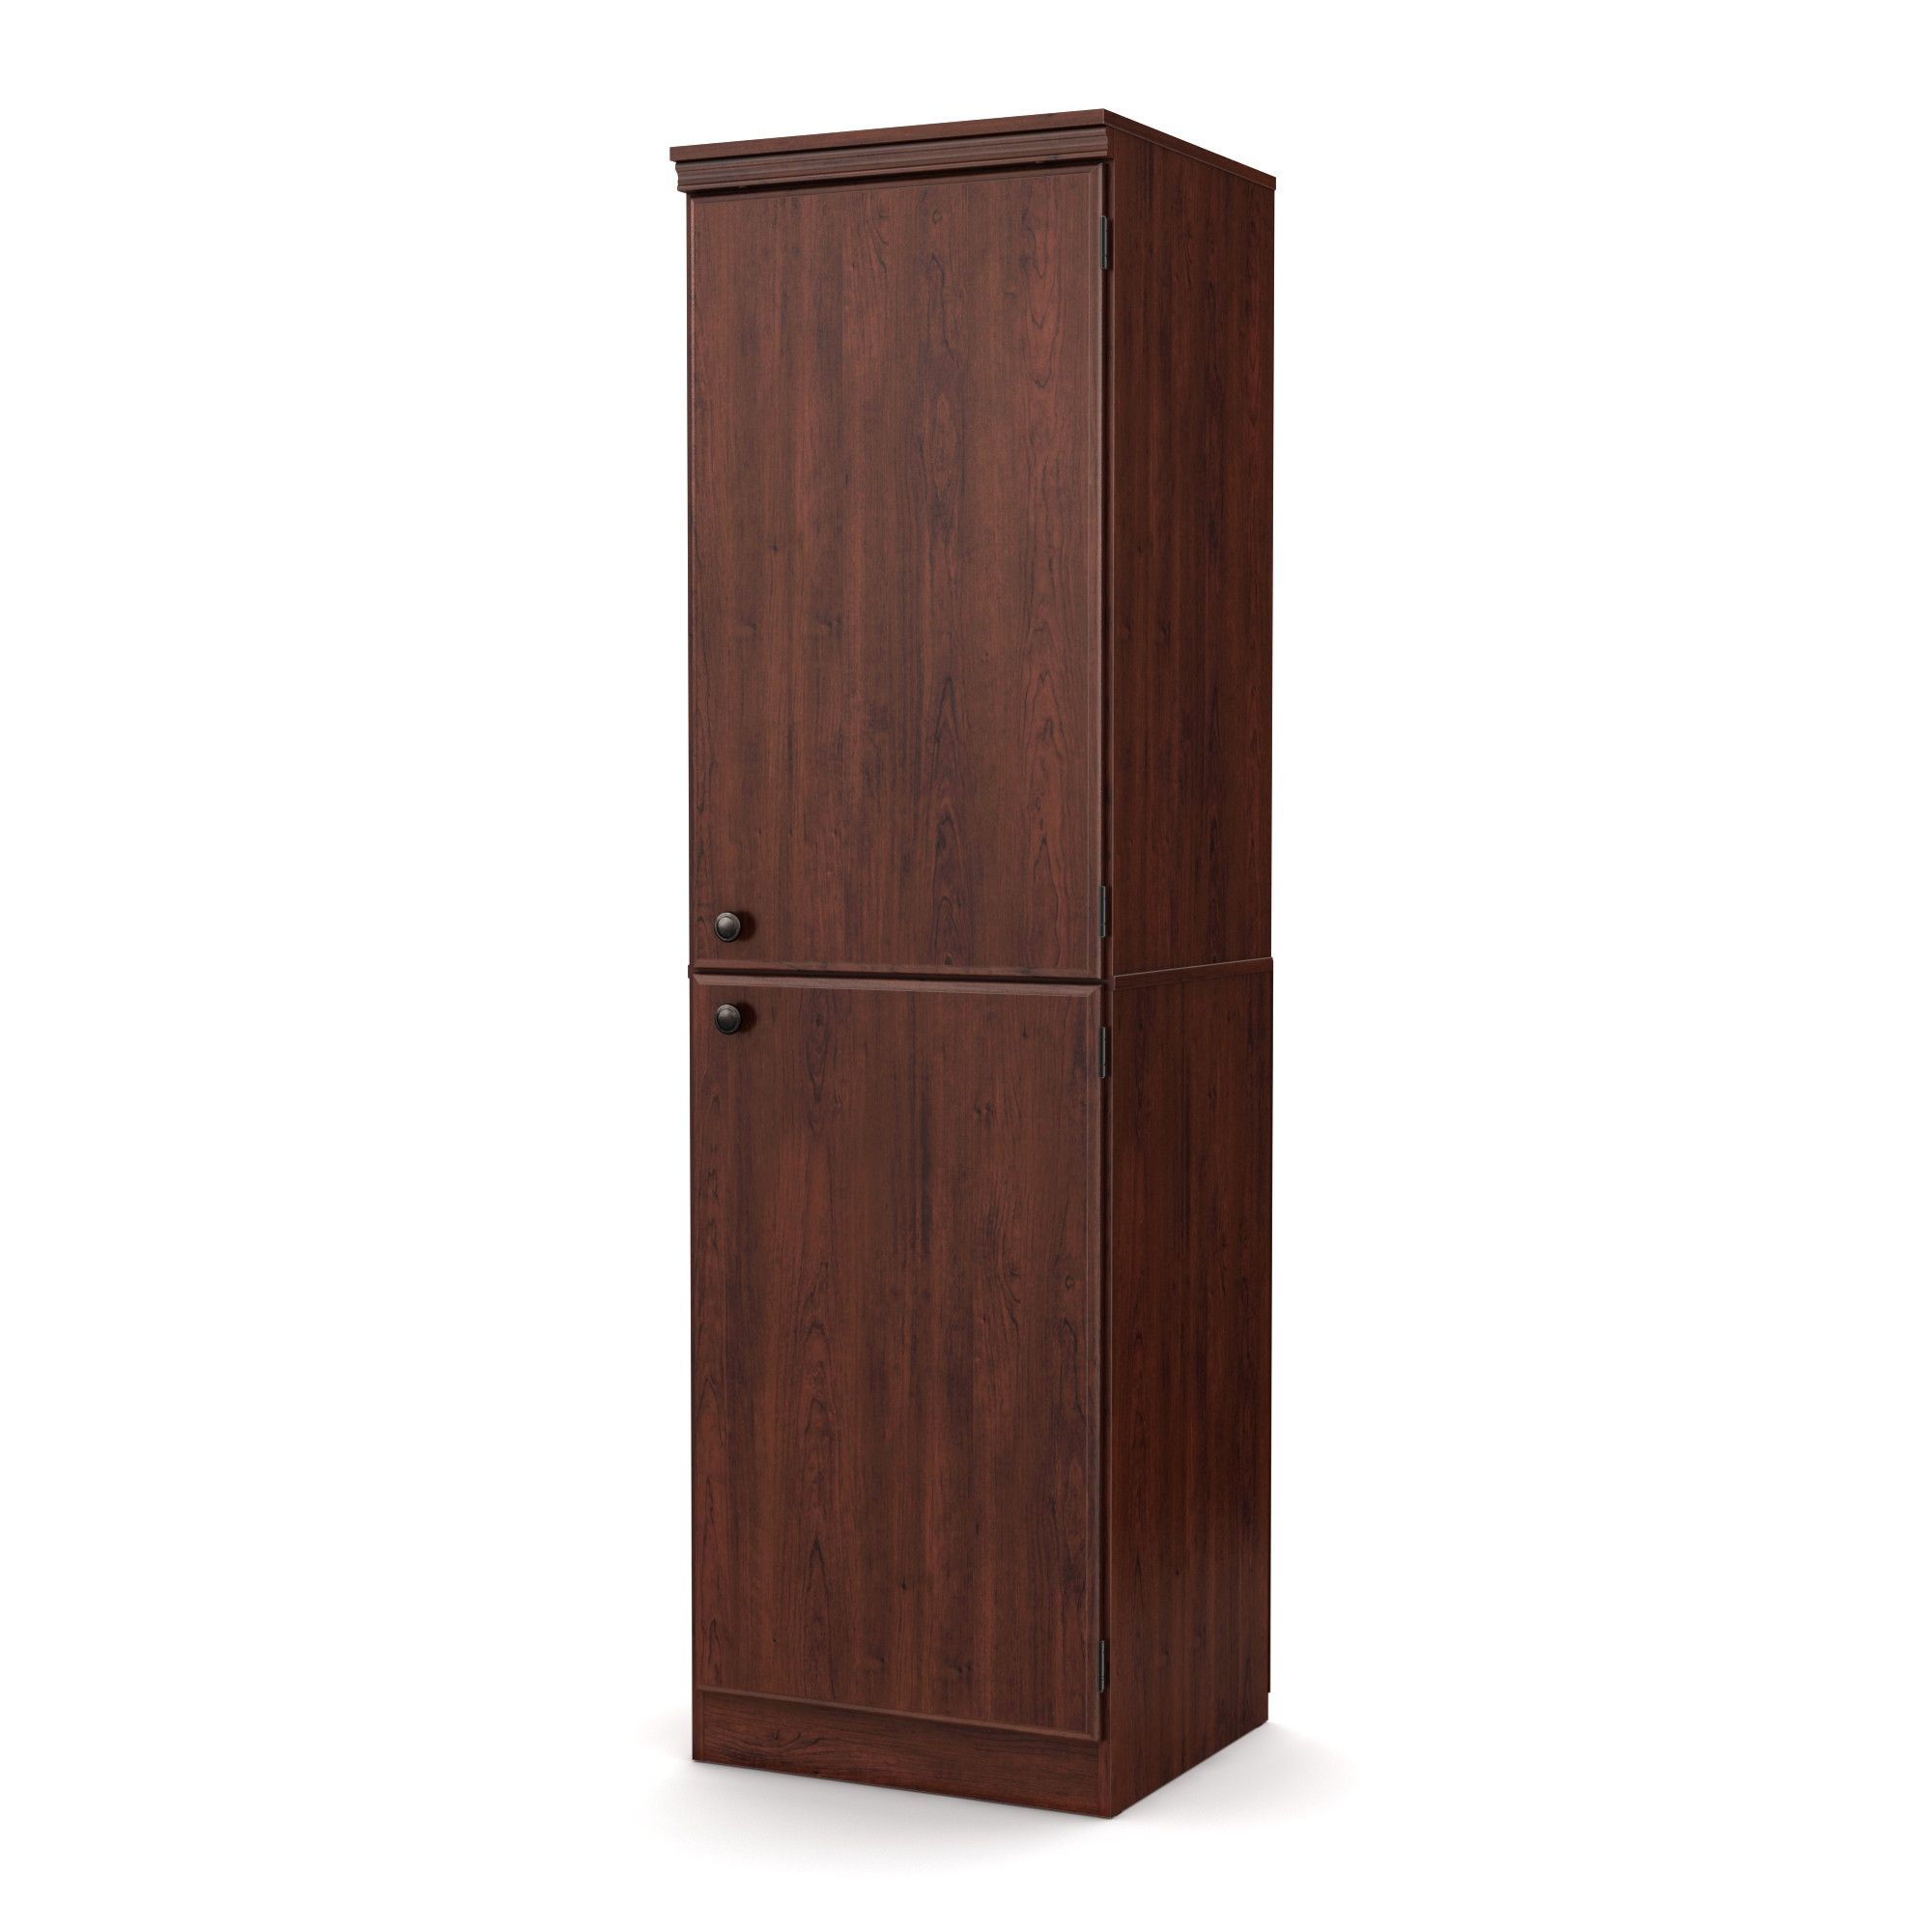 Furniture Fancy Wardrobe Armoire For Wardrobe Organizer Idea Inside Solid Wood Wardrobe Closets (View 24 of 25)